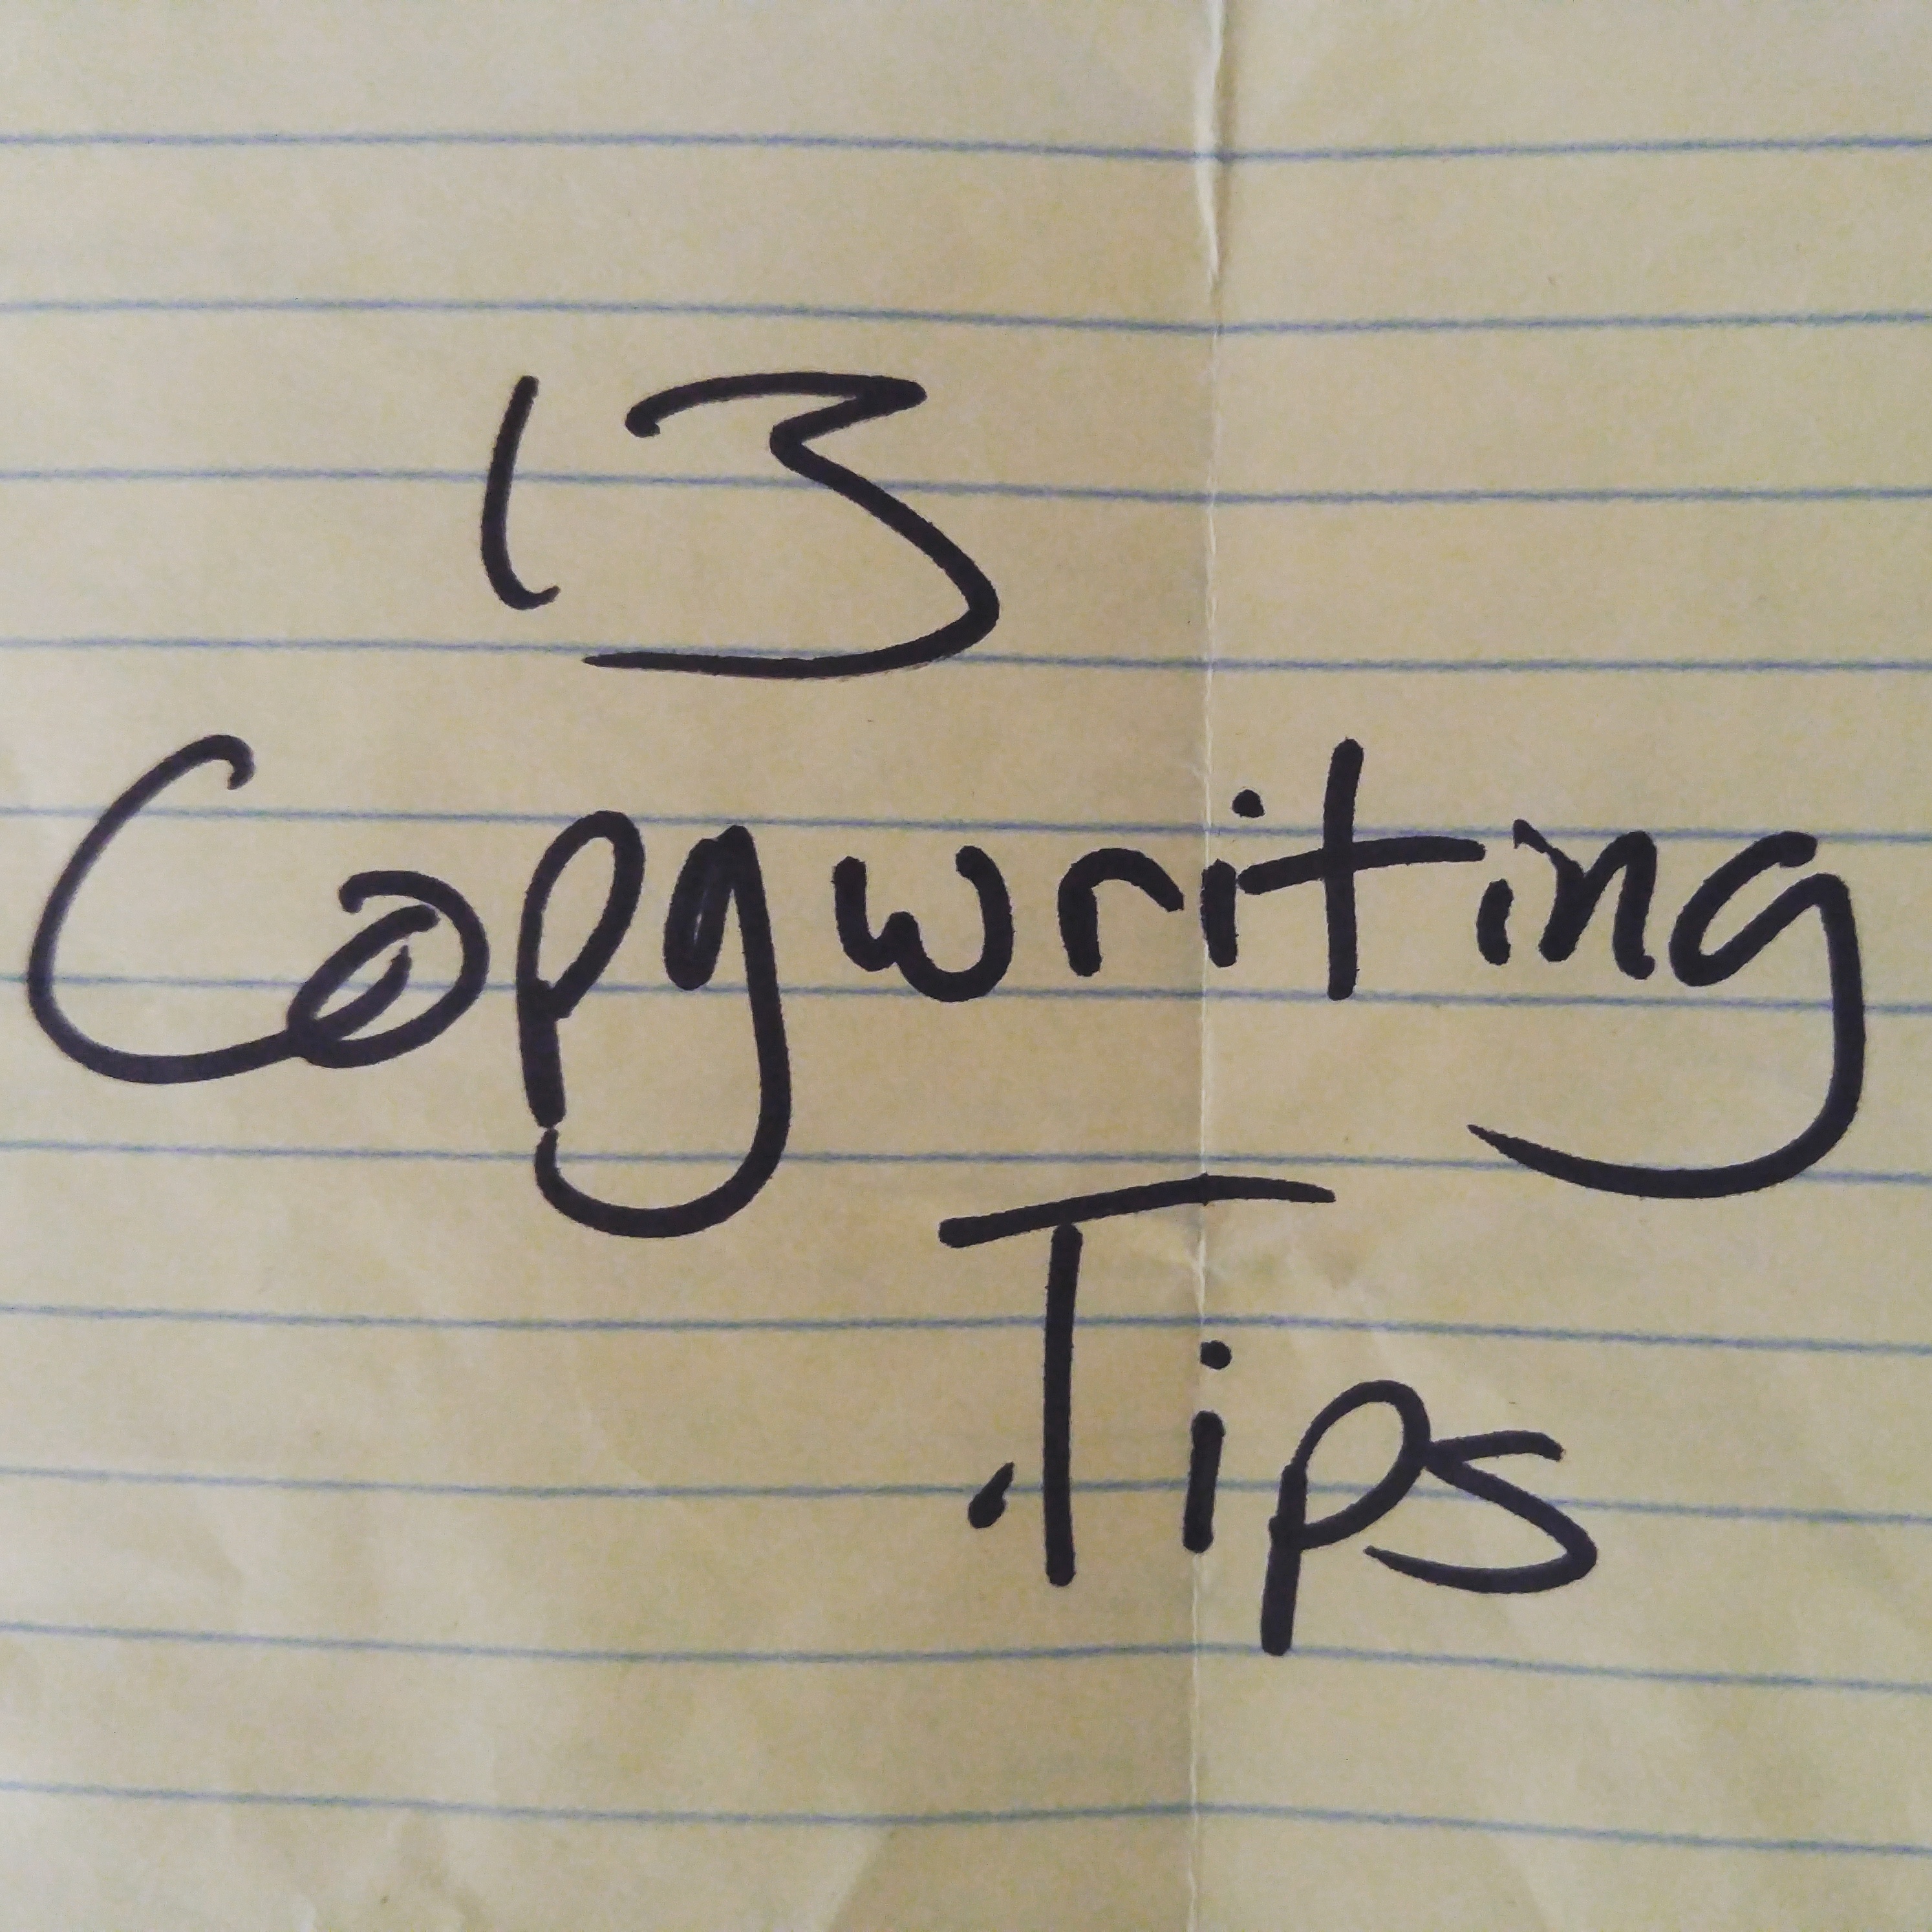 13 Copywriting Tips